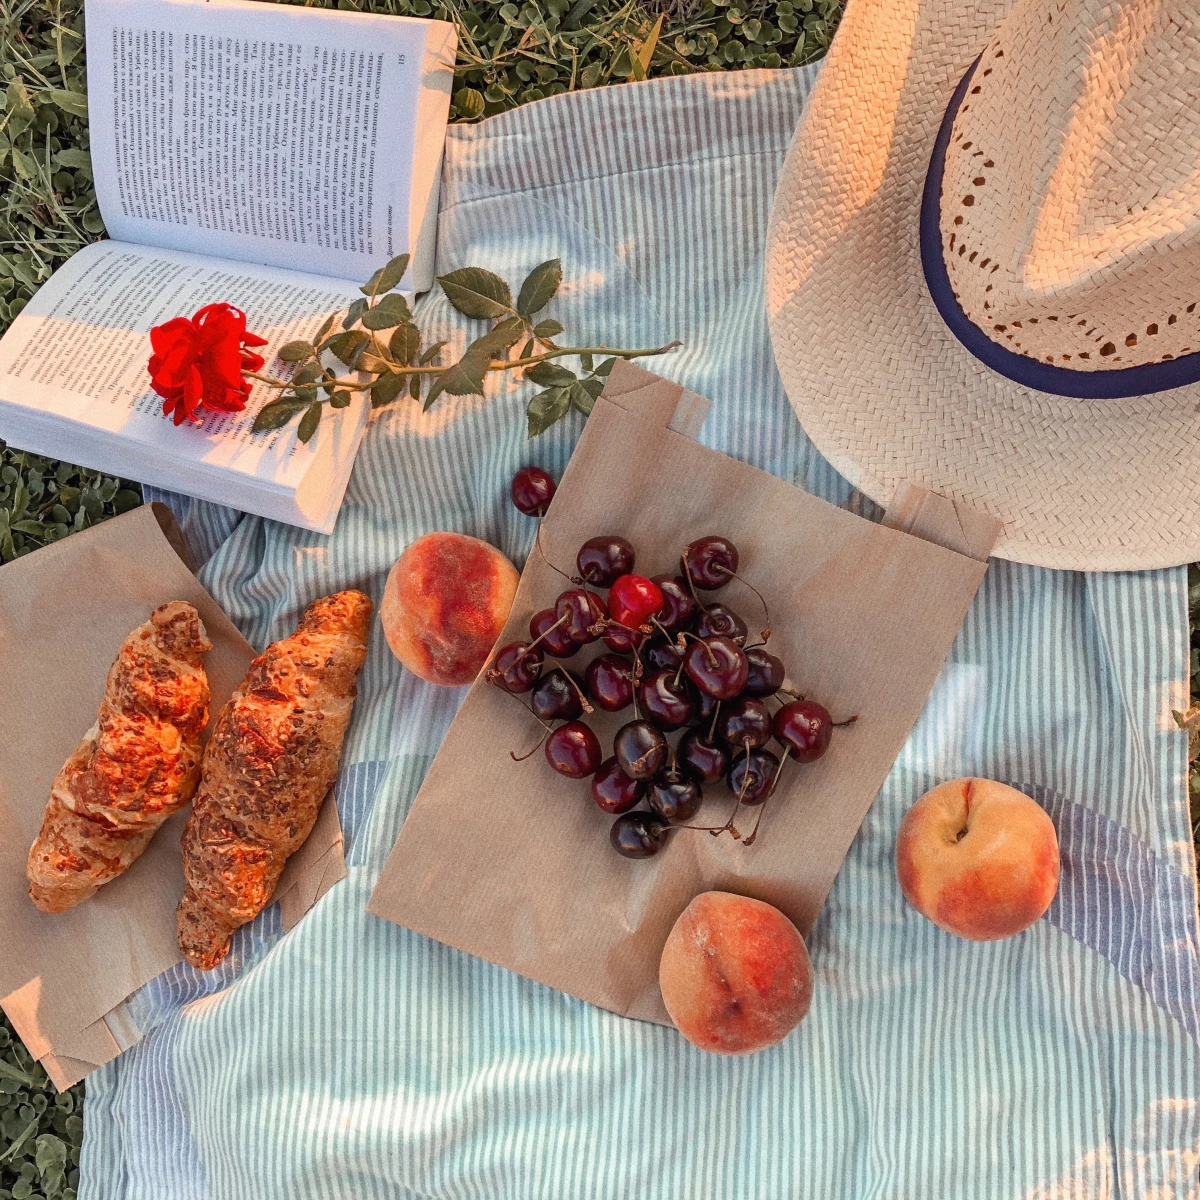 picnic with cherries